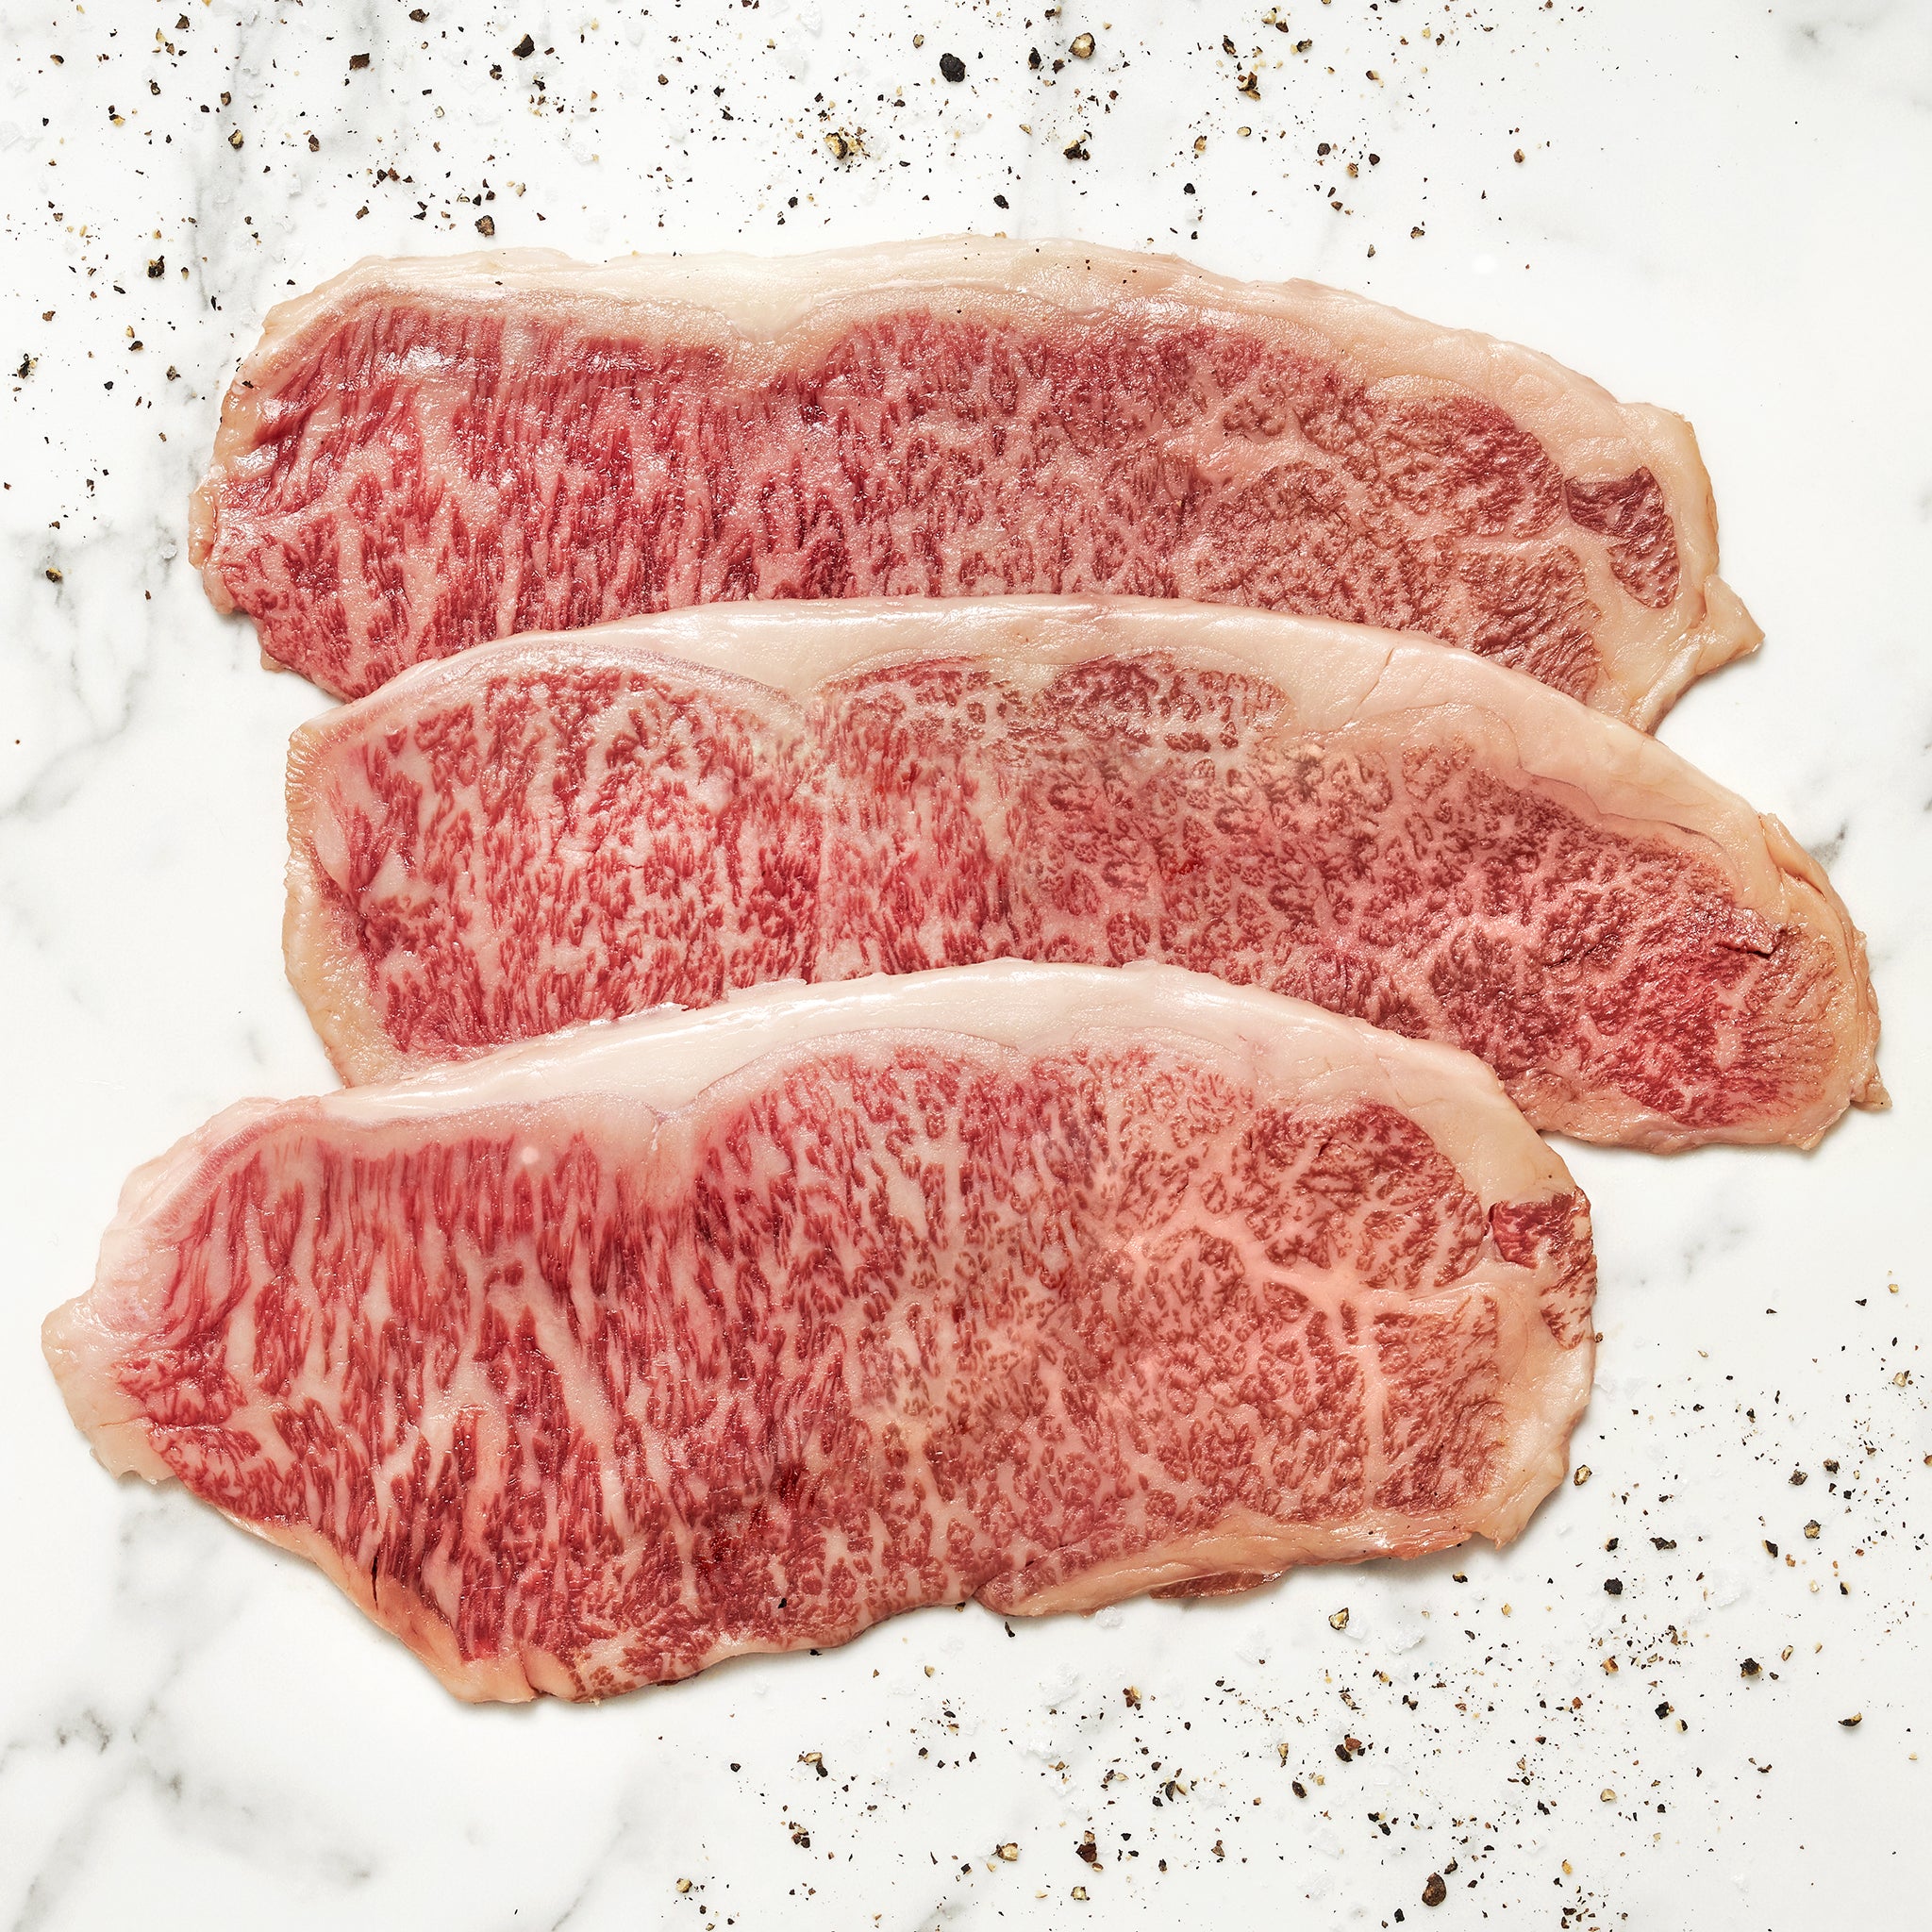 A5 Wagyu Beef Thin Ny Strip Steak Wild Fork Foods 